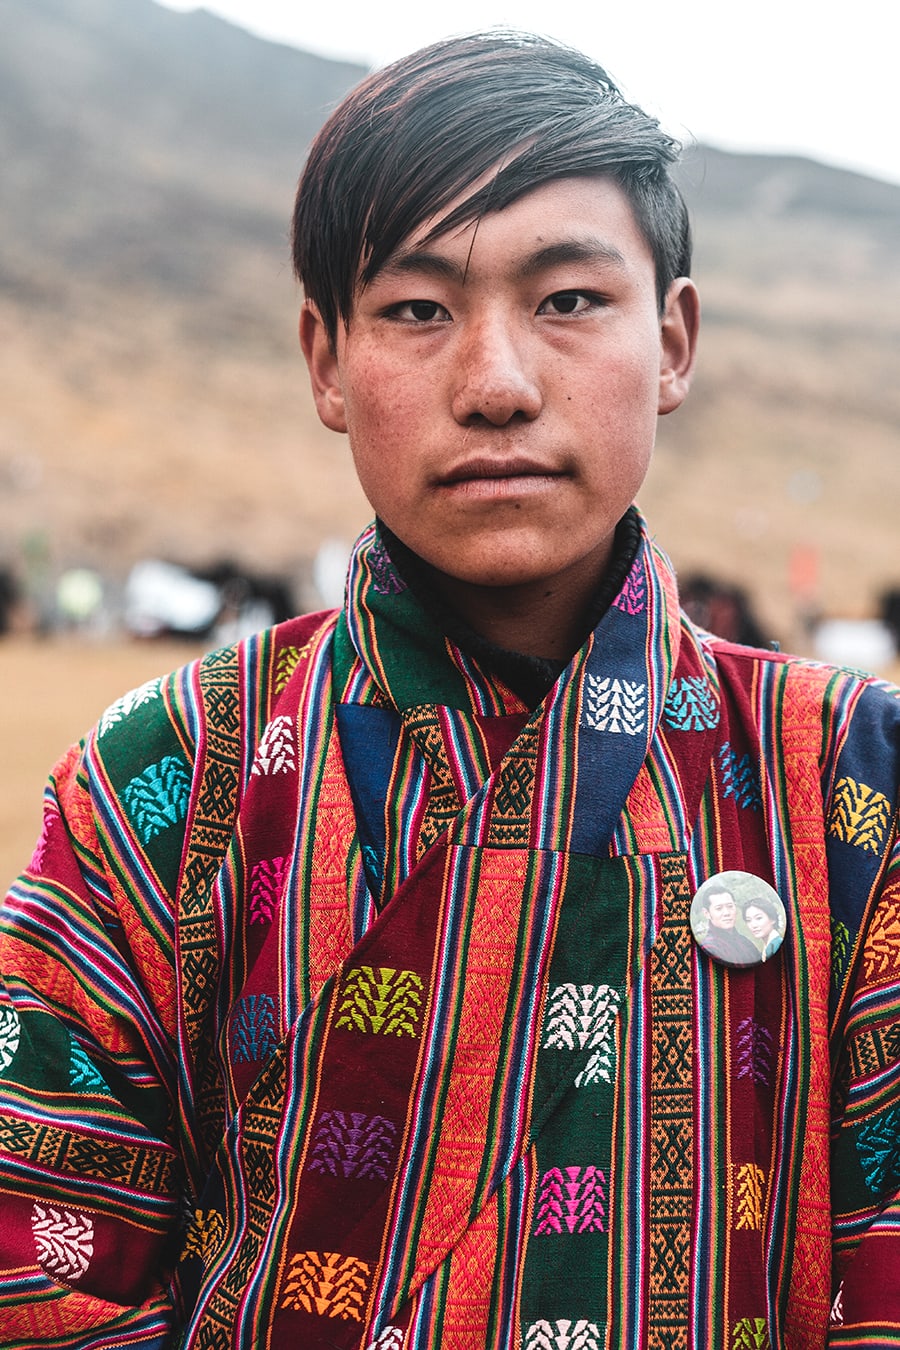 Layap boy dressed in traditional clothing for the Royal Highlander Festival in Laya, Bhutan.